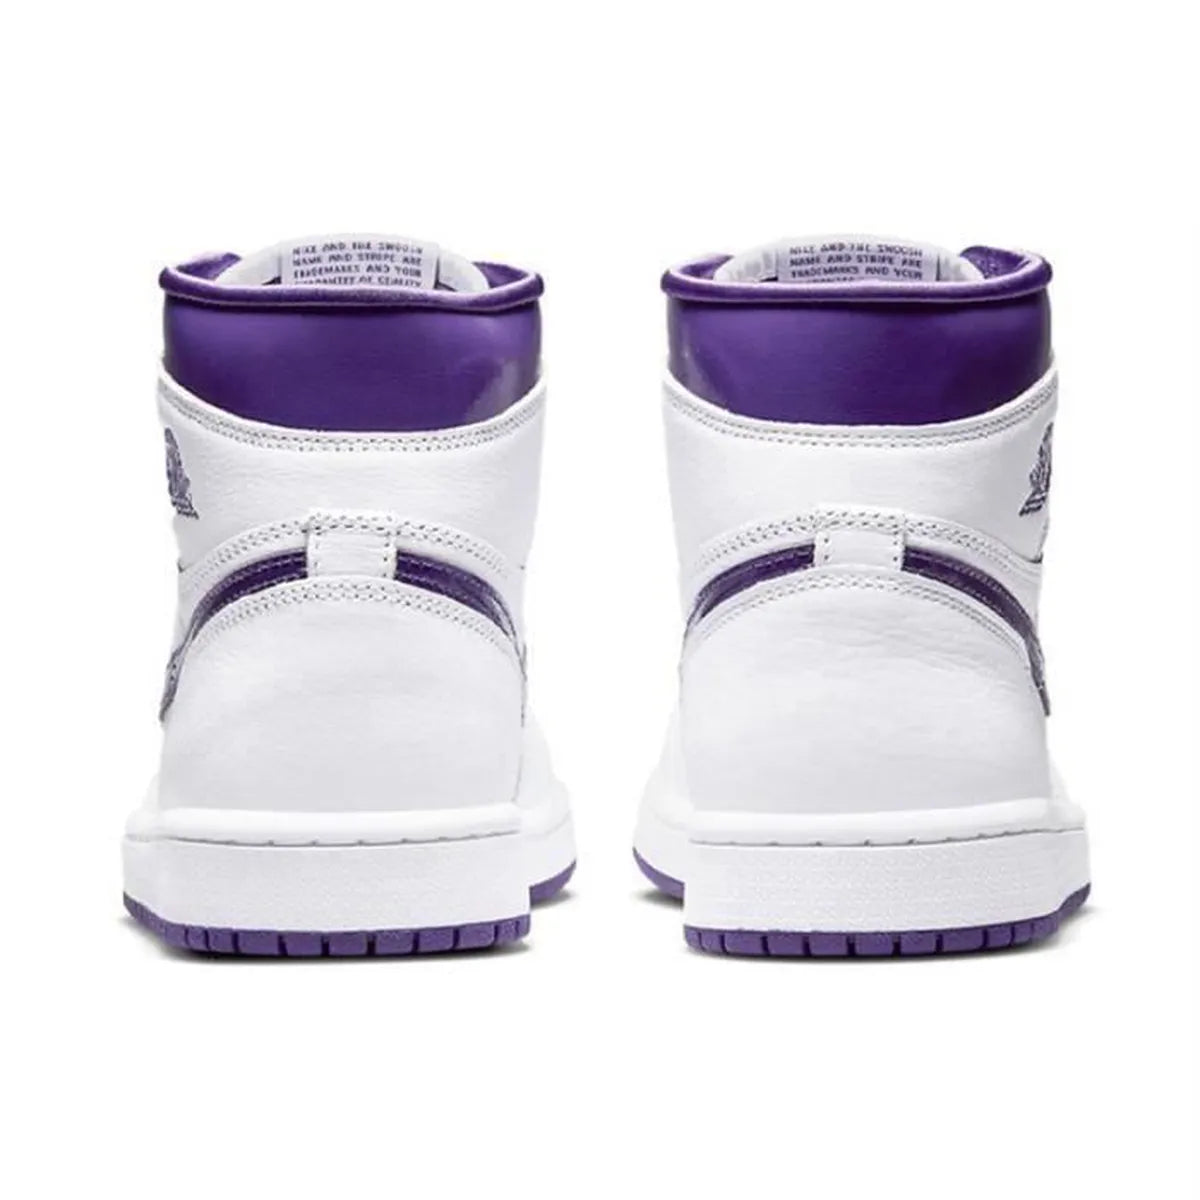 Air Jordan 1 OG "Court Purple - Enfants